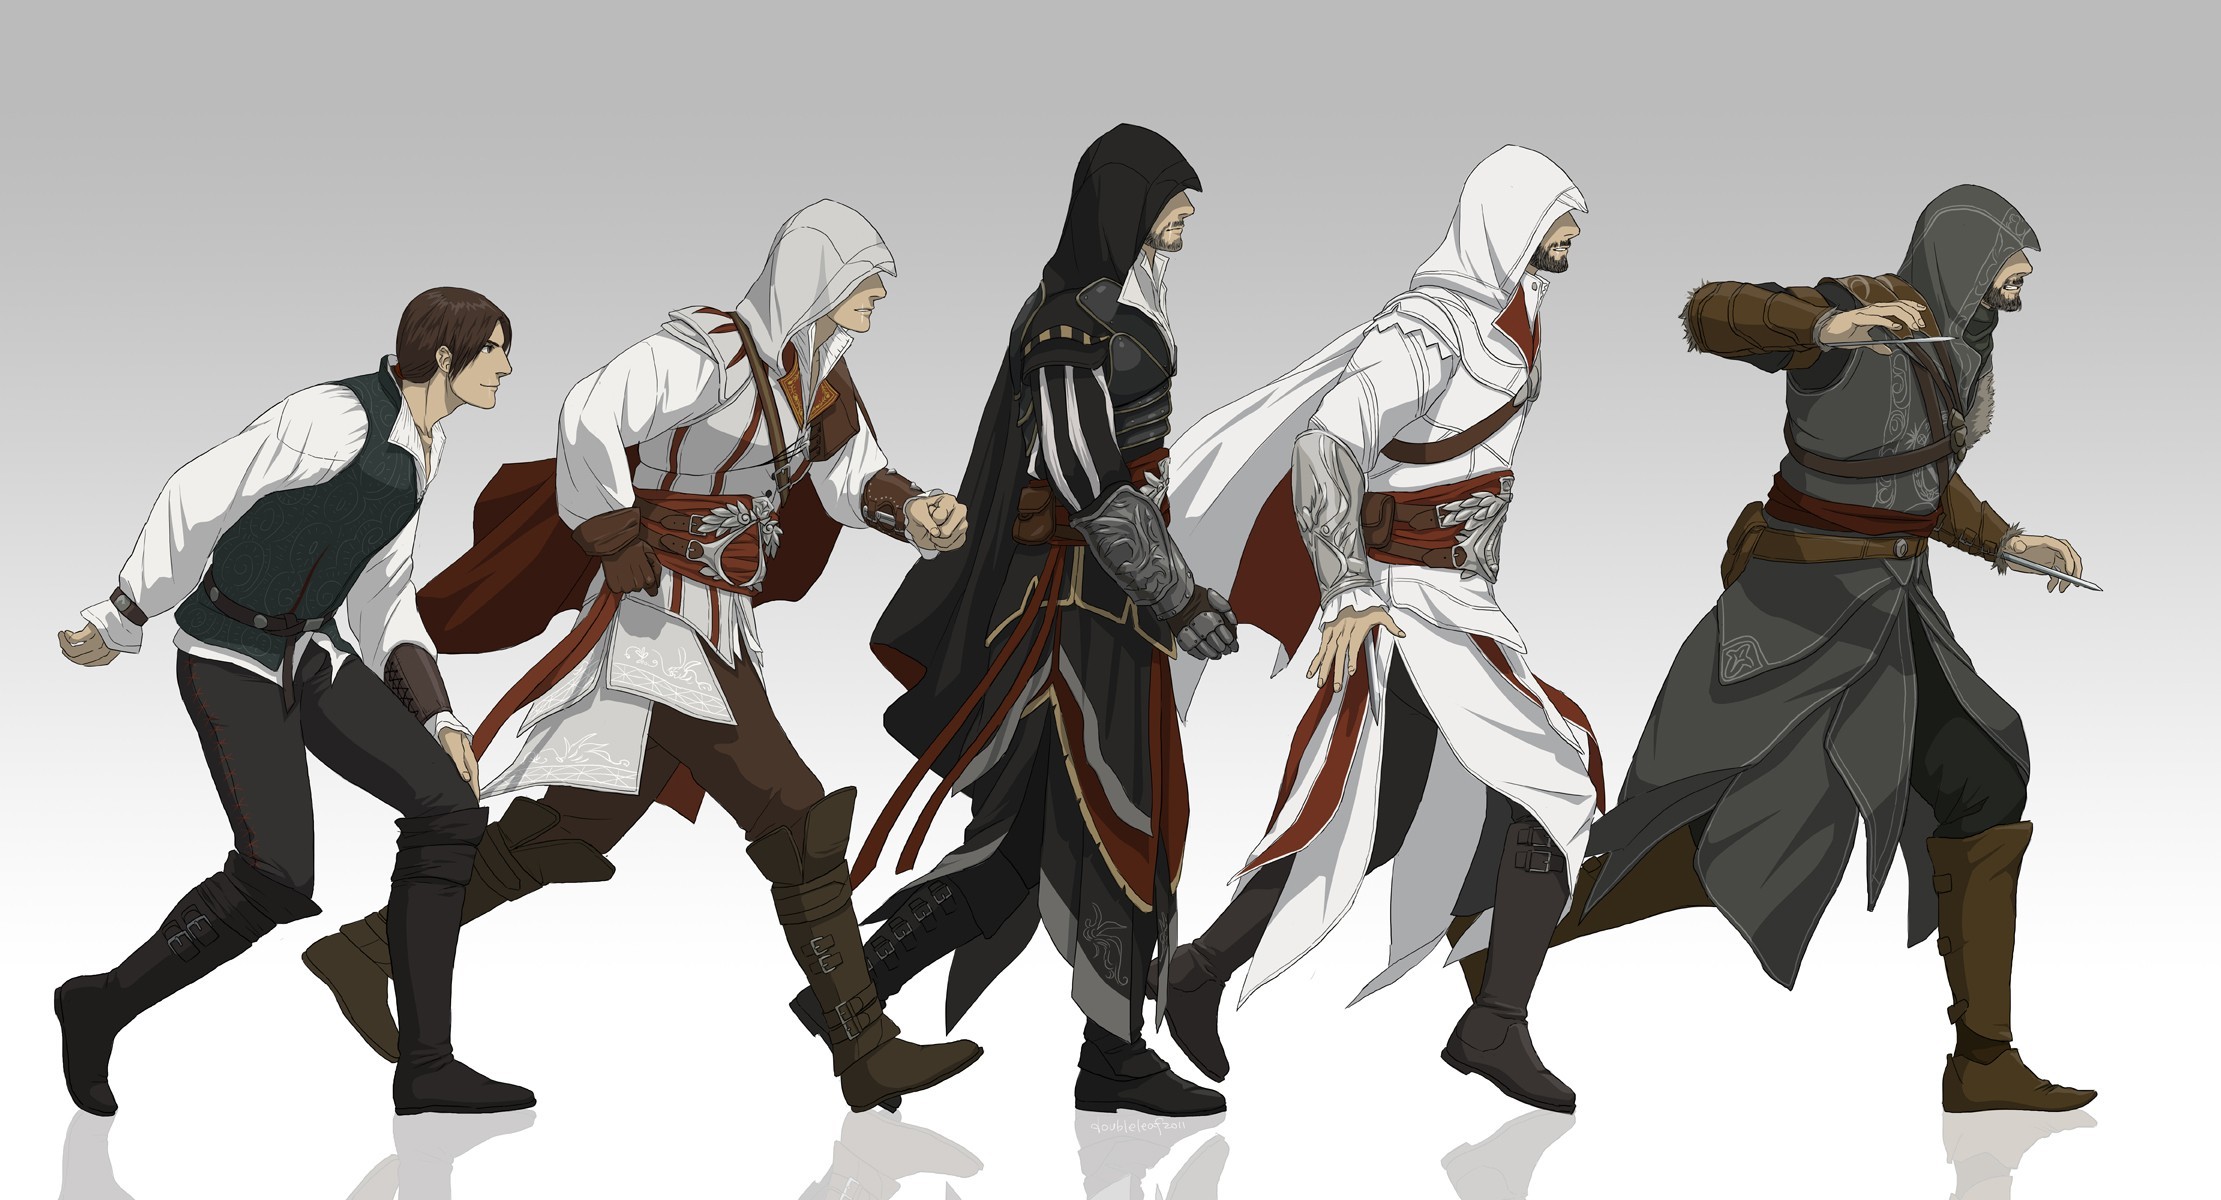 Assassins Creed, Ezio Auditore Da Firenze Wallpaper